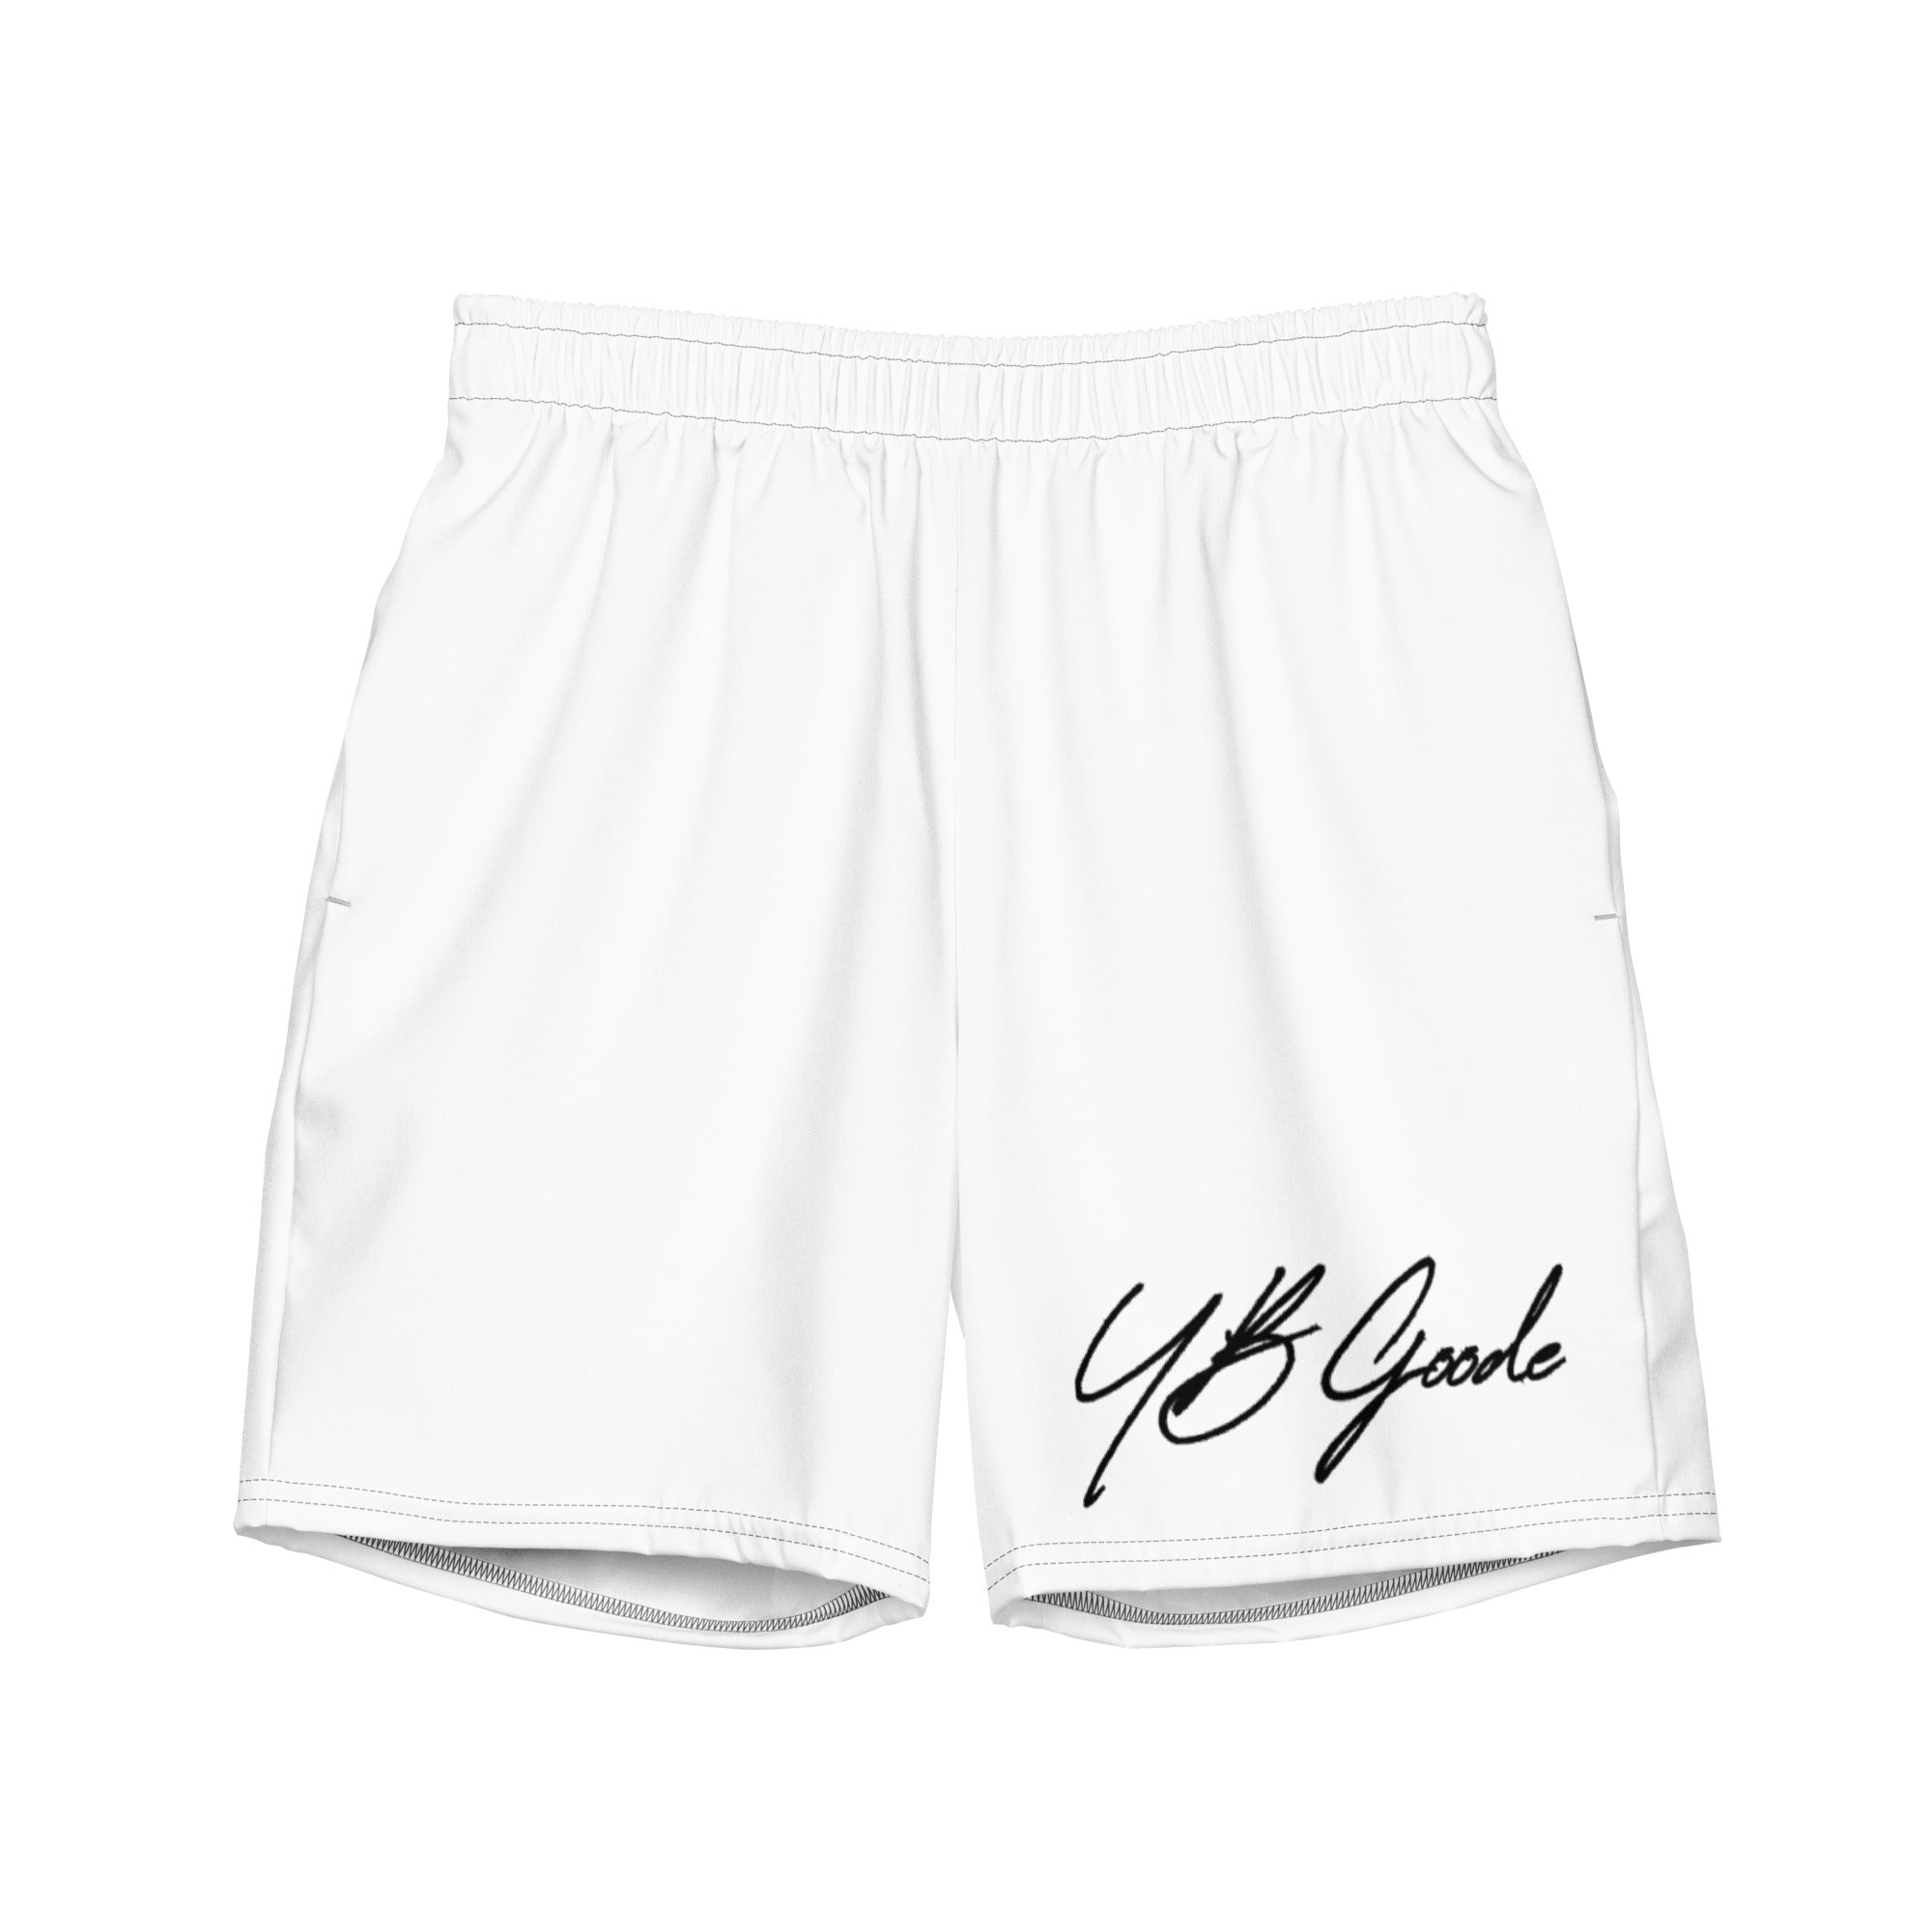 YBGoode Signature swim trunks (white)